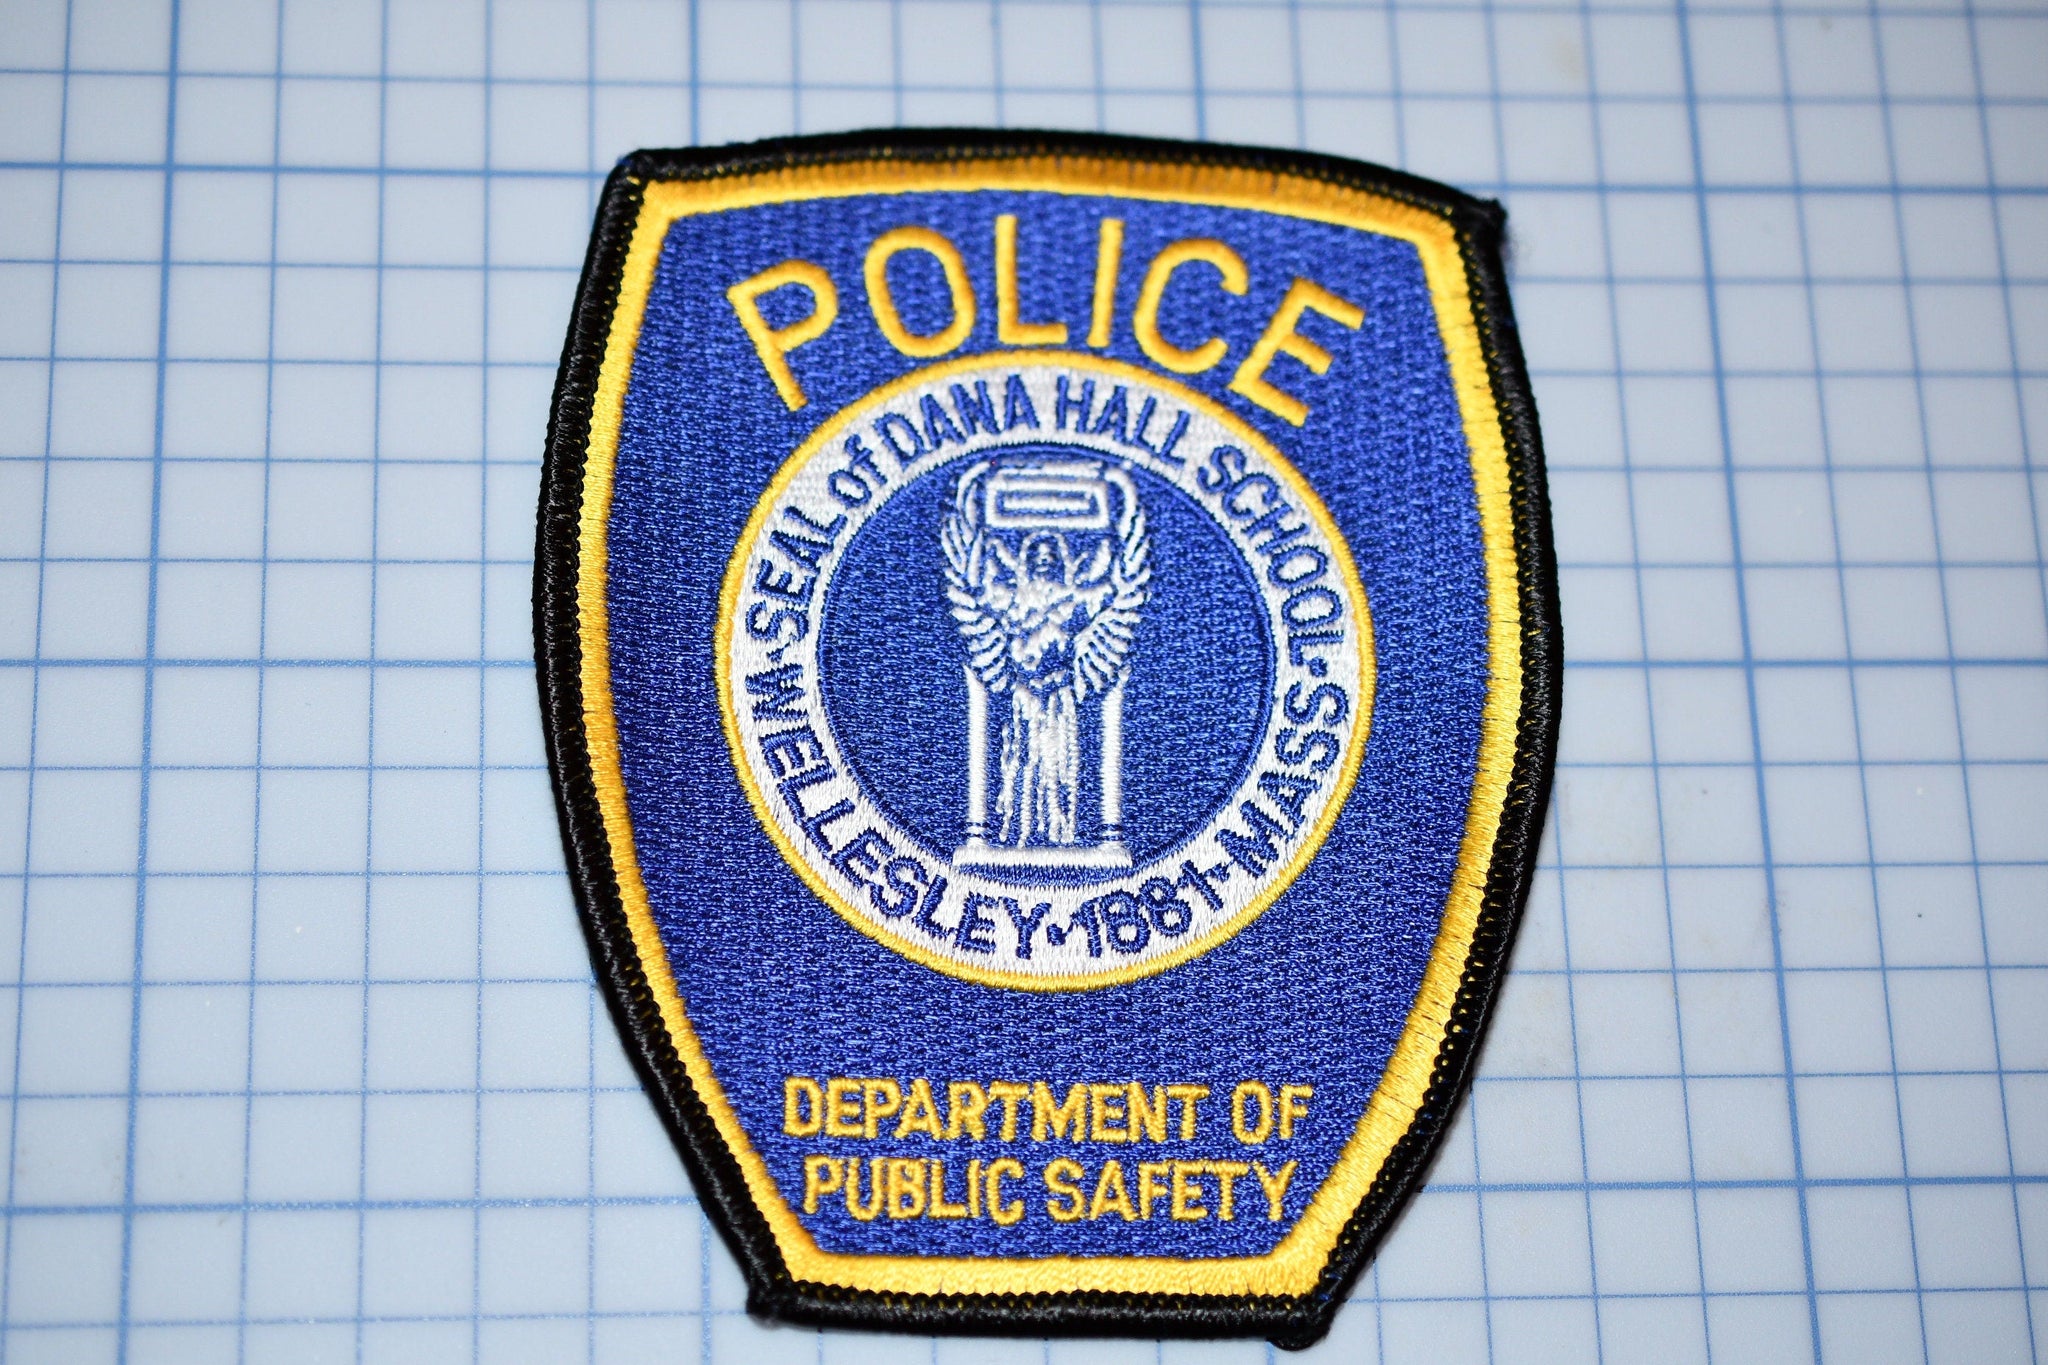 Diana Hall School Massachusetts Police Patch (S3-265)